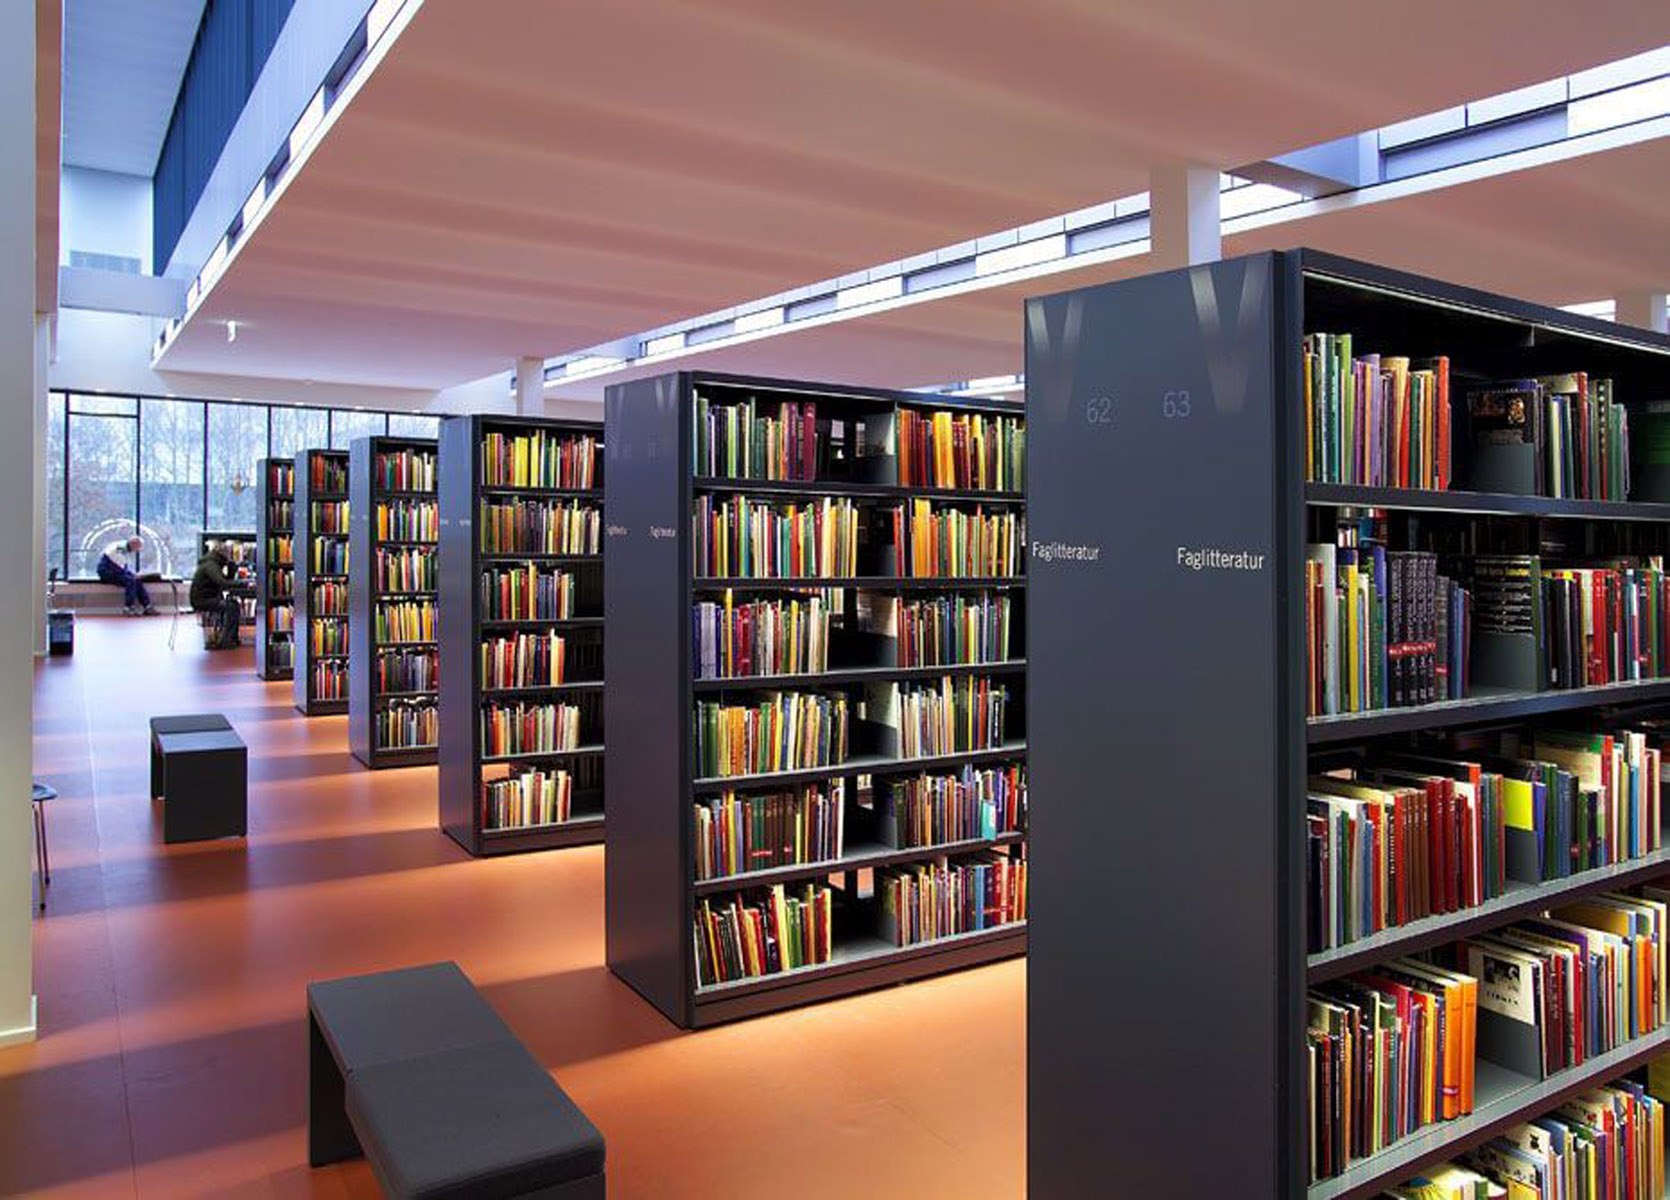 Compiled library. Современная библиотека. Интерьер библиотеки. Интерьер общественной библиотеки. Дизайн современной библиотеки.